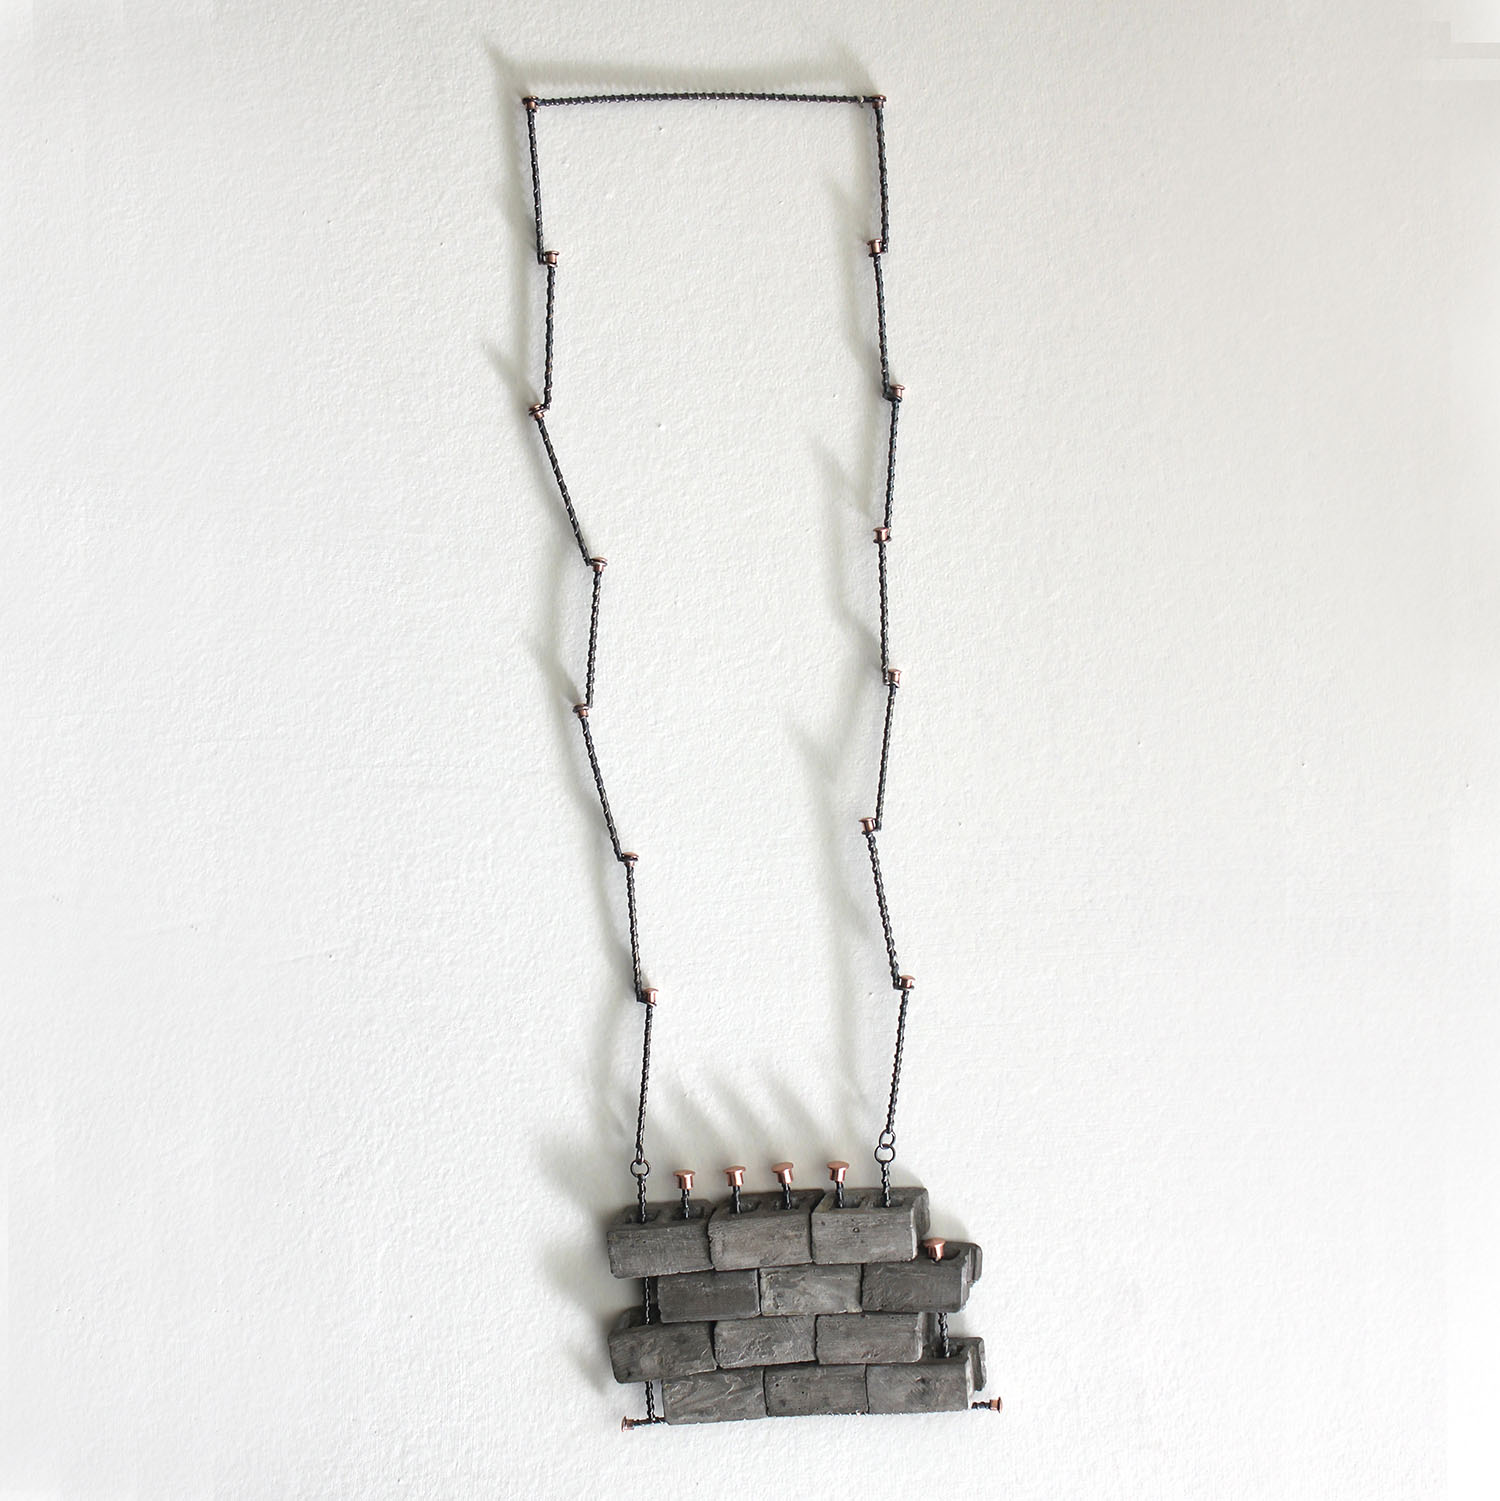 cinder building blocks necklace by Natalie Macellaio